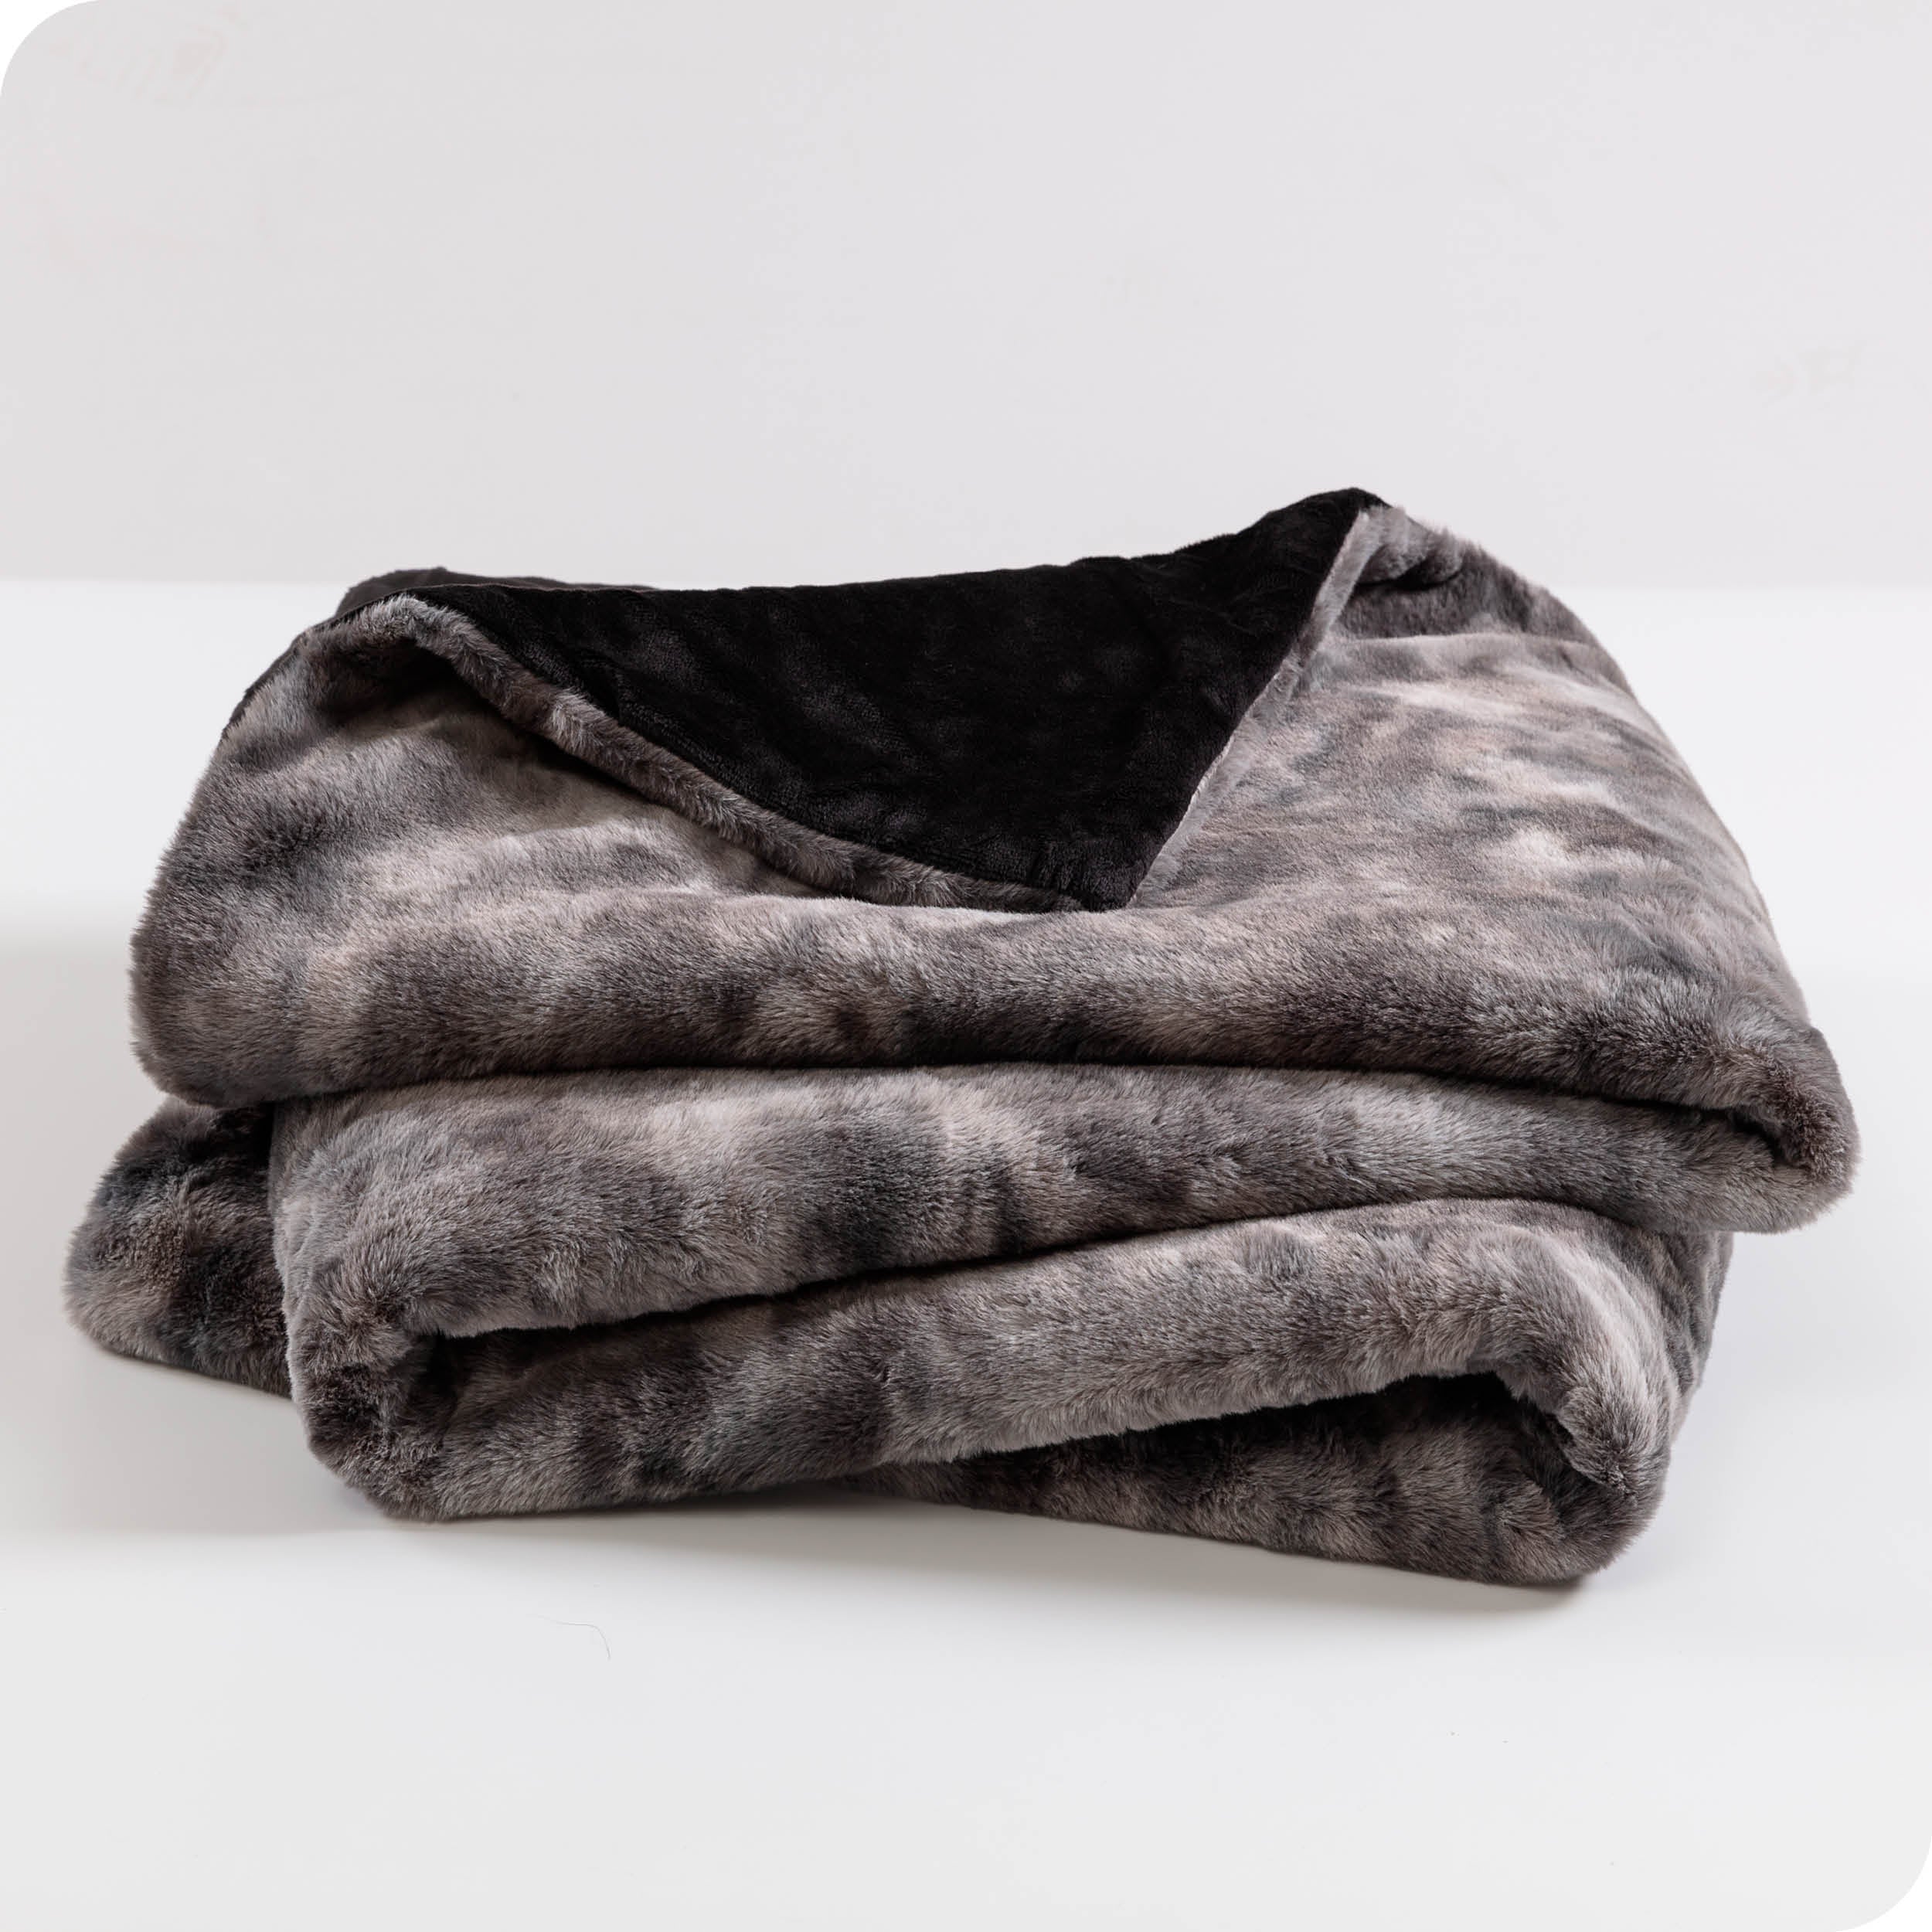 Faux Fur blanket folded loosely